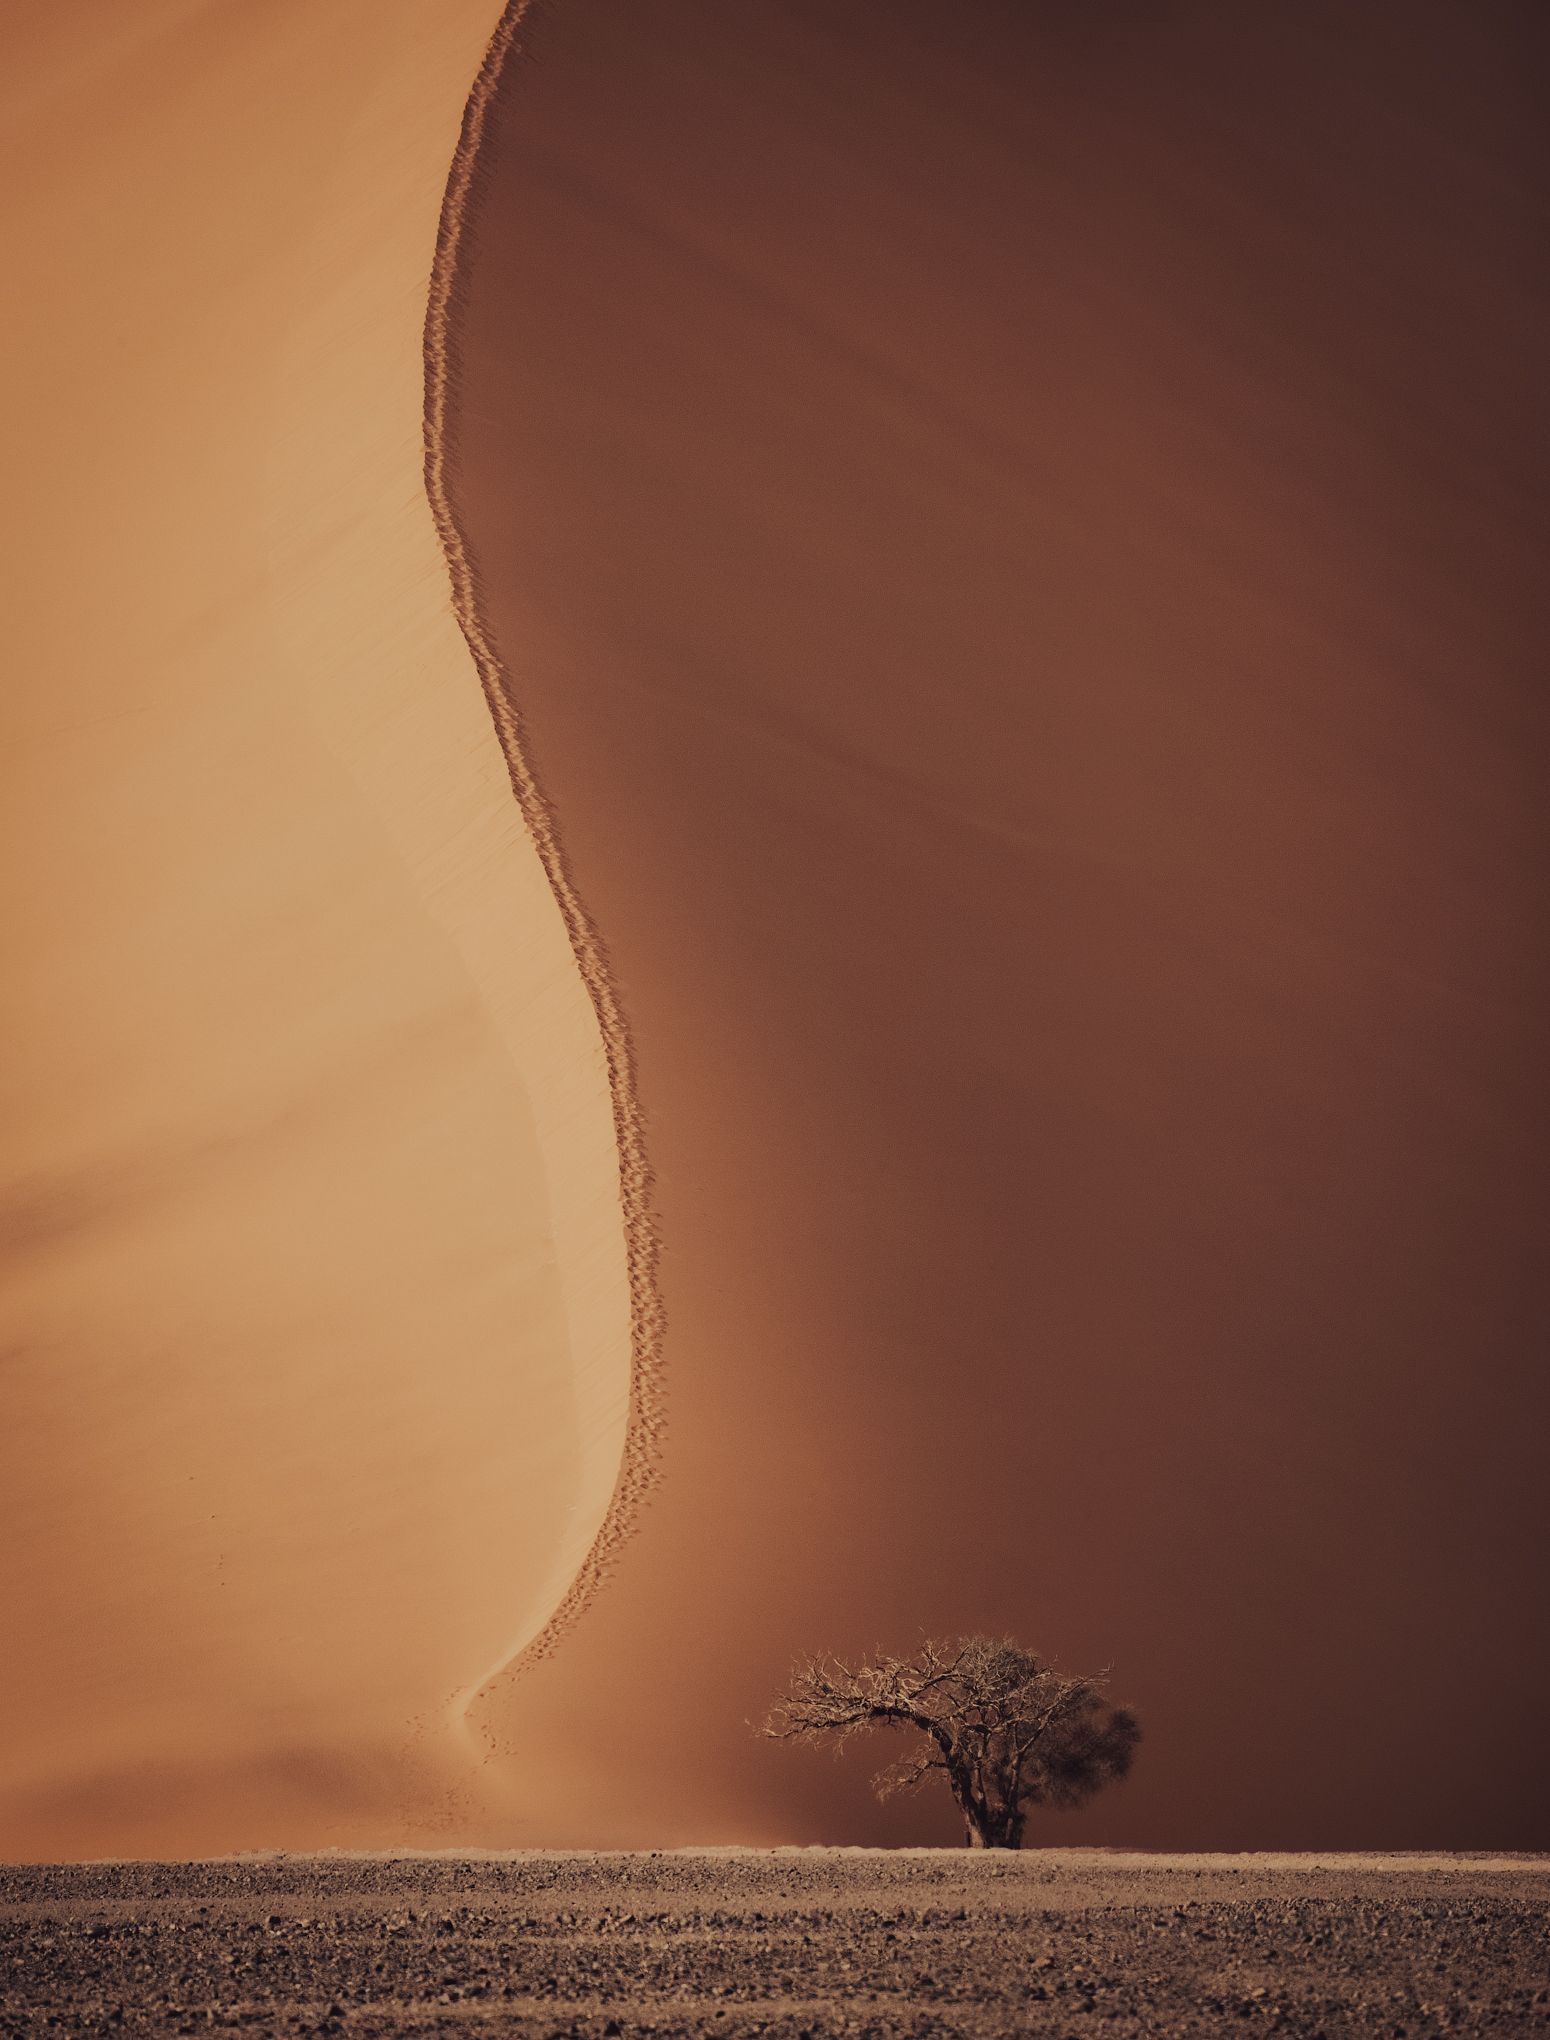 #дюна #соссусфлеи #намибия #африка #пейза #дерево #свет #тень #DuneSossusvlei #Namibia #africa #tree #Dune #Sossusvlei, Наталия Деркач